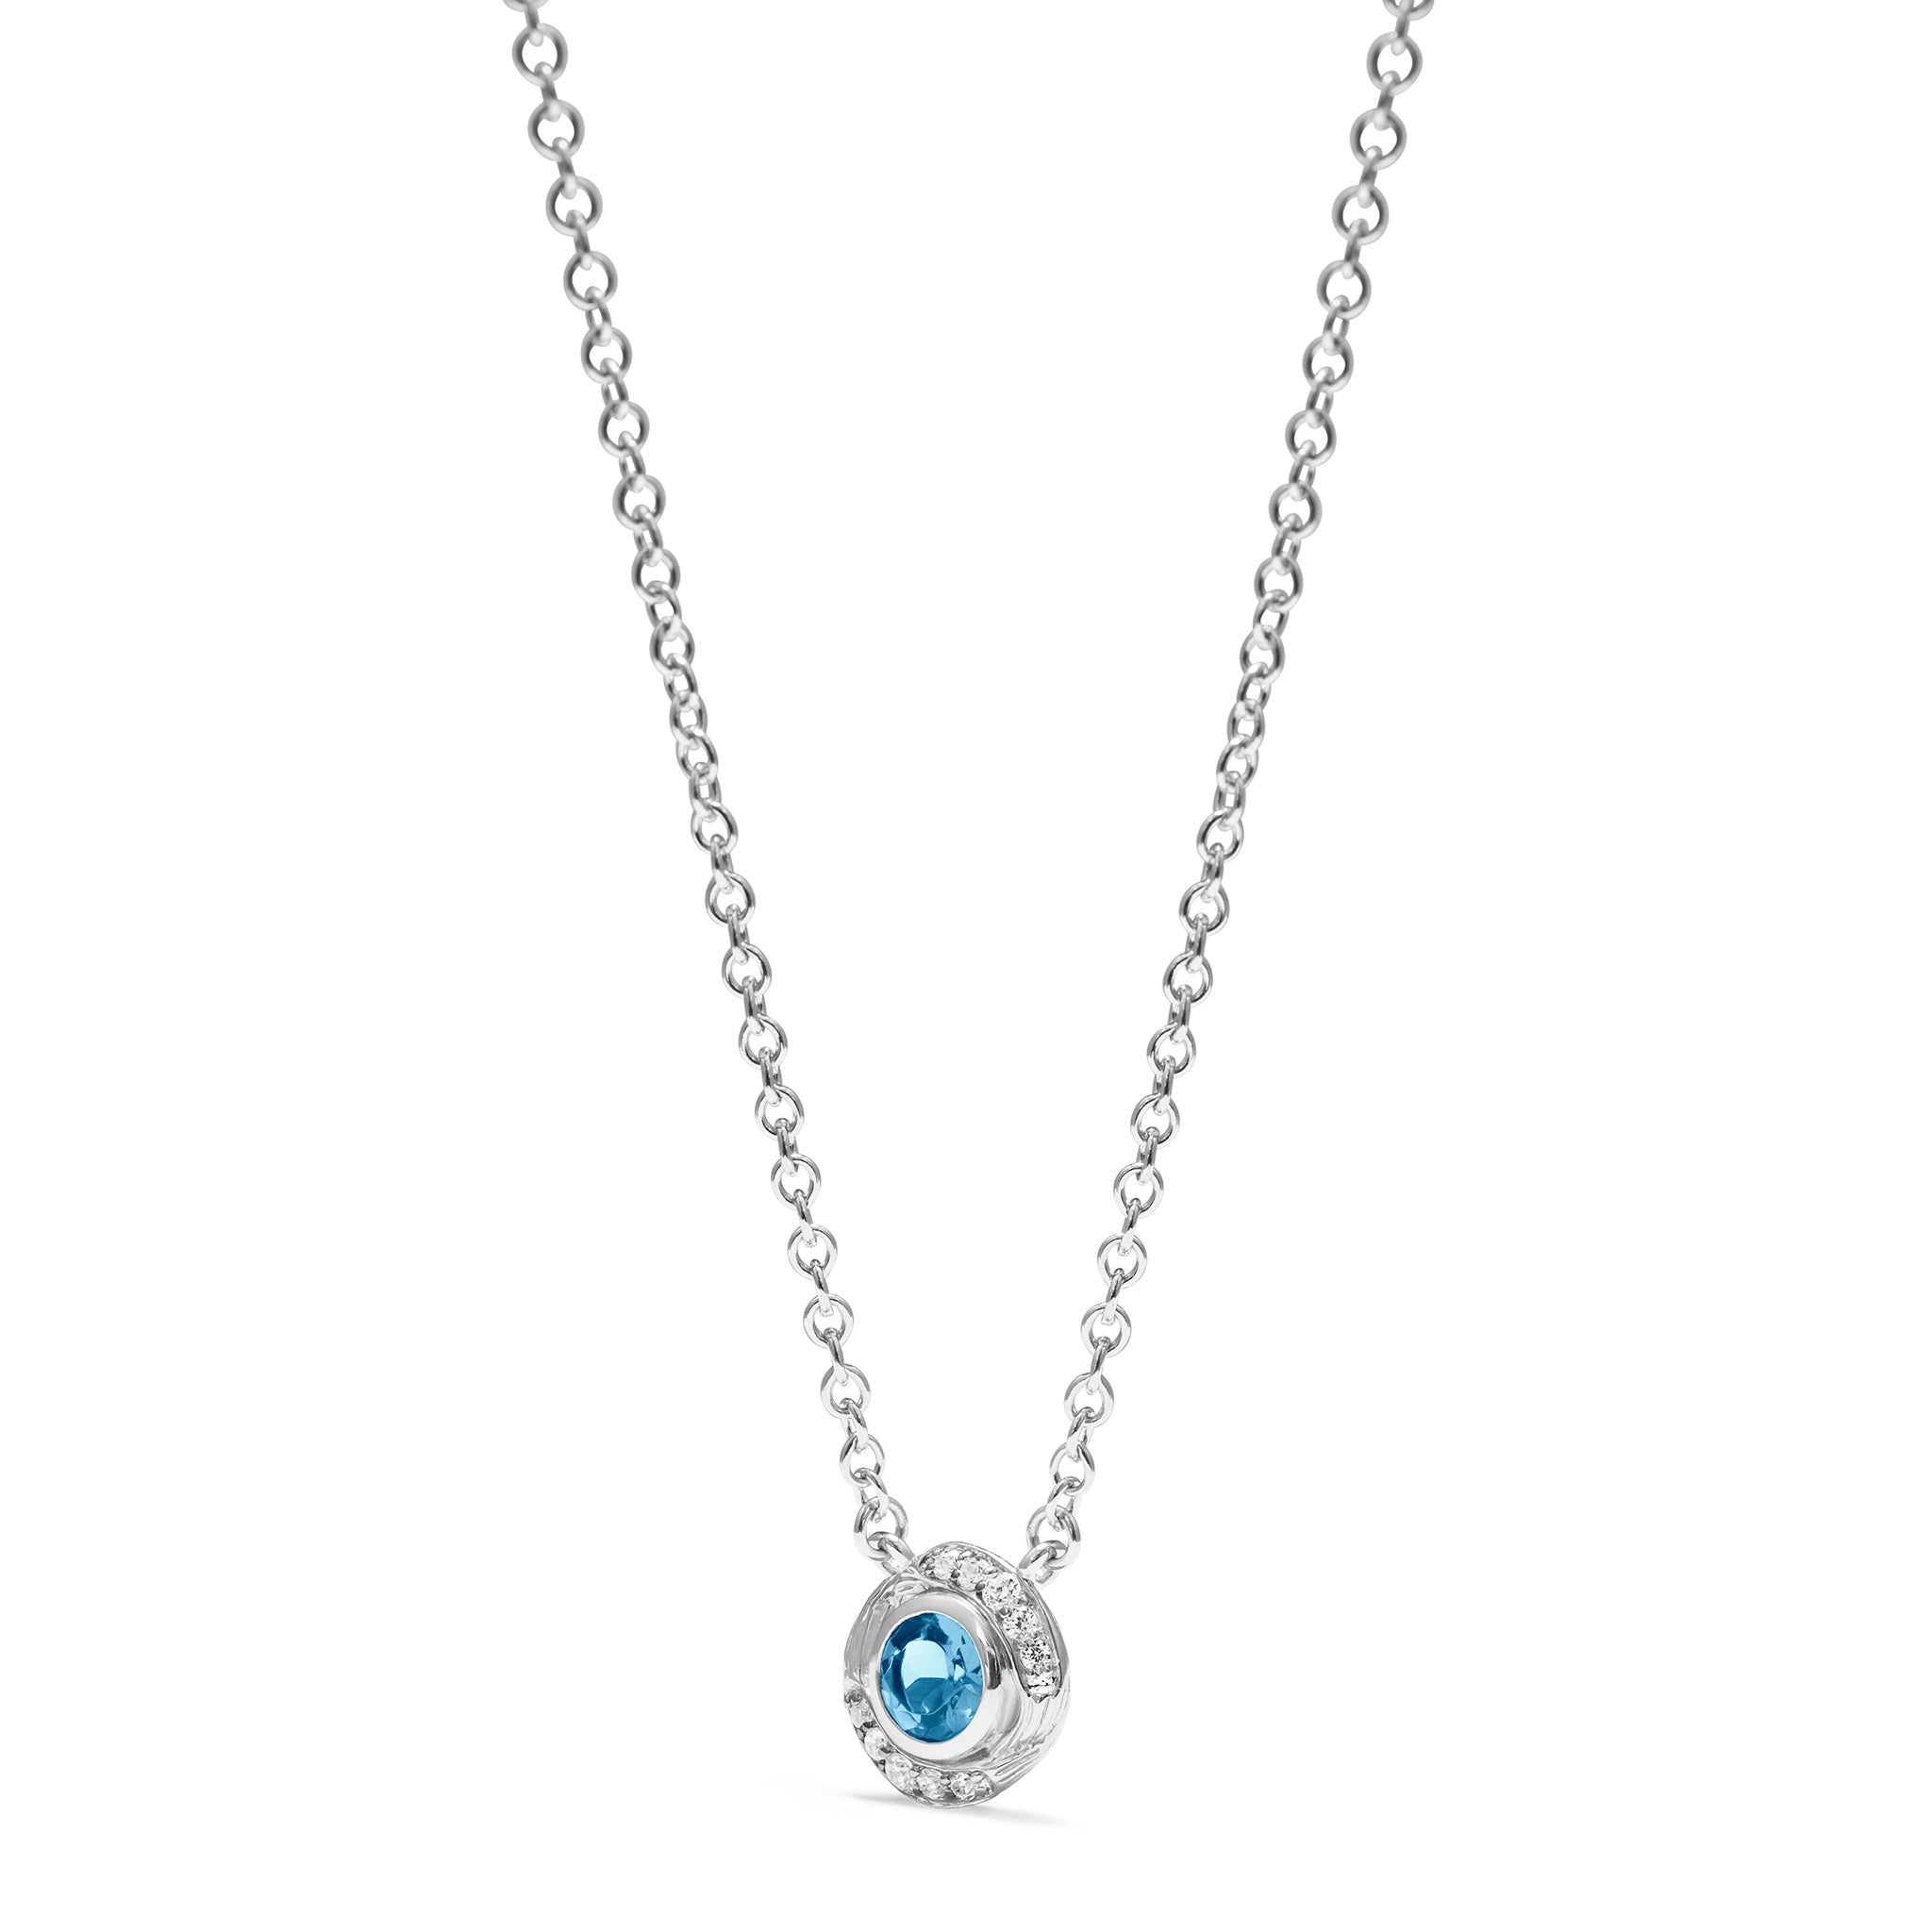 Santorini Necklace with London Blue Topaz and Diamonds